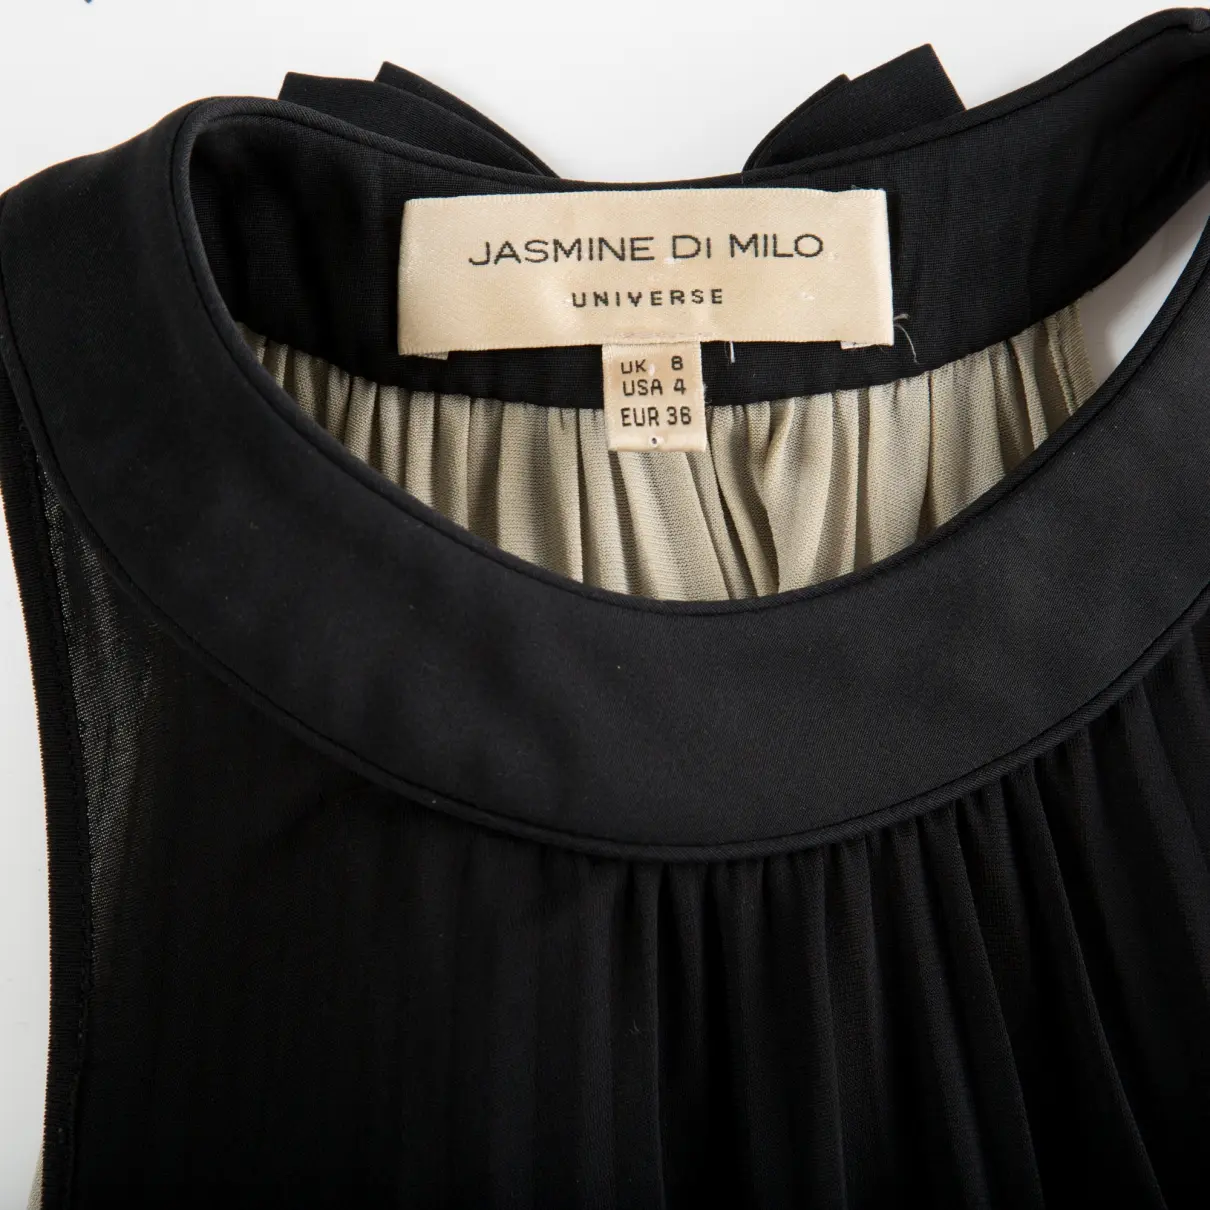 Buy Jasmine Di Milo MINI DRESS online